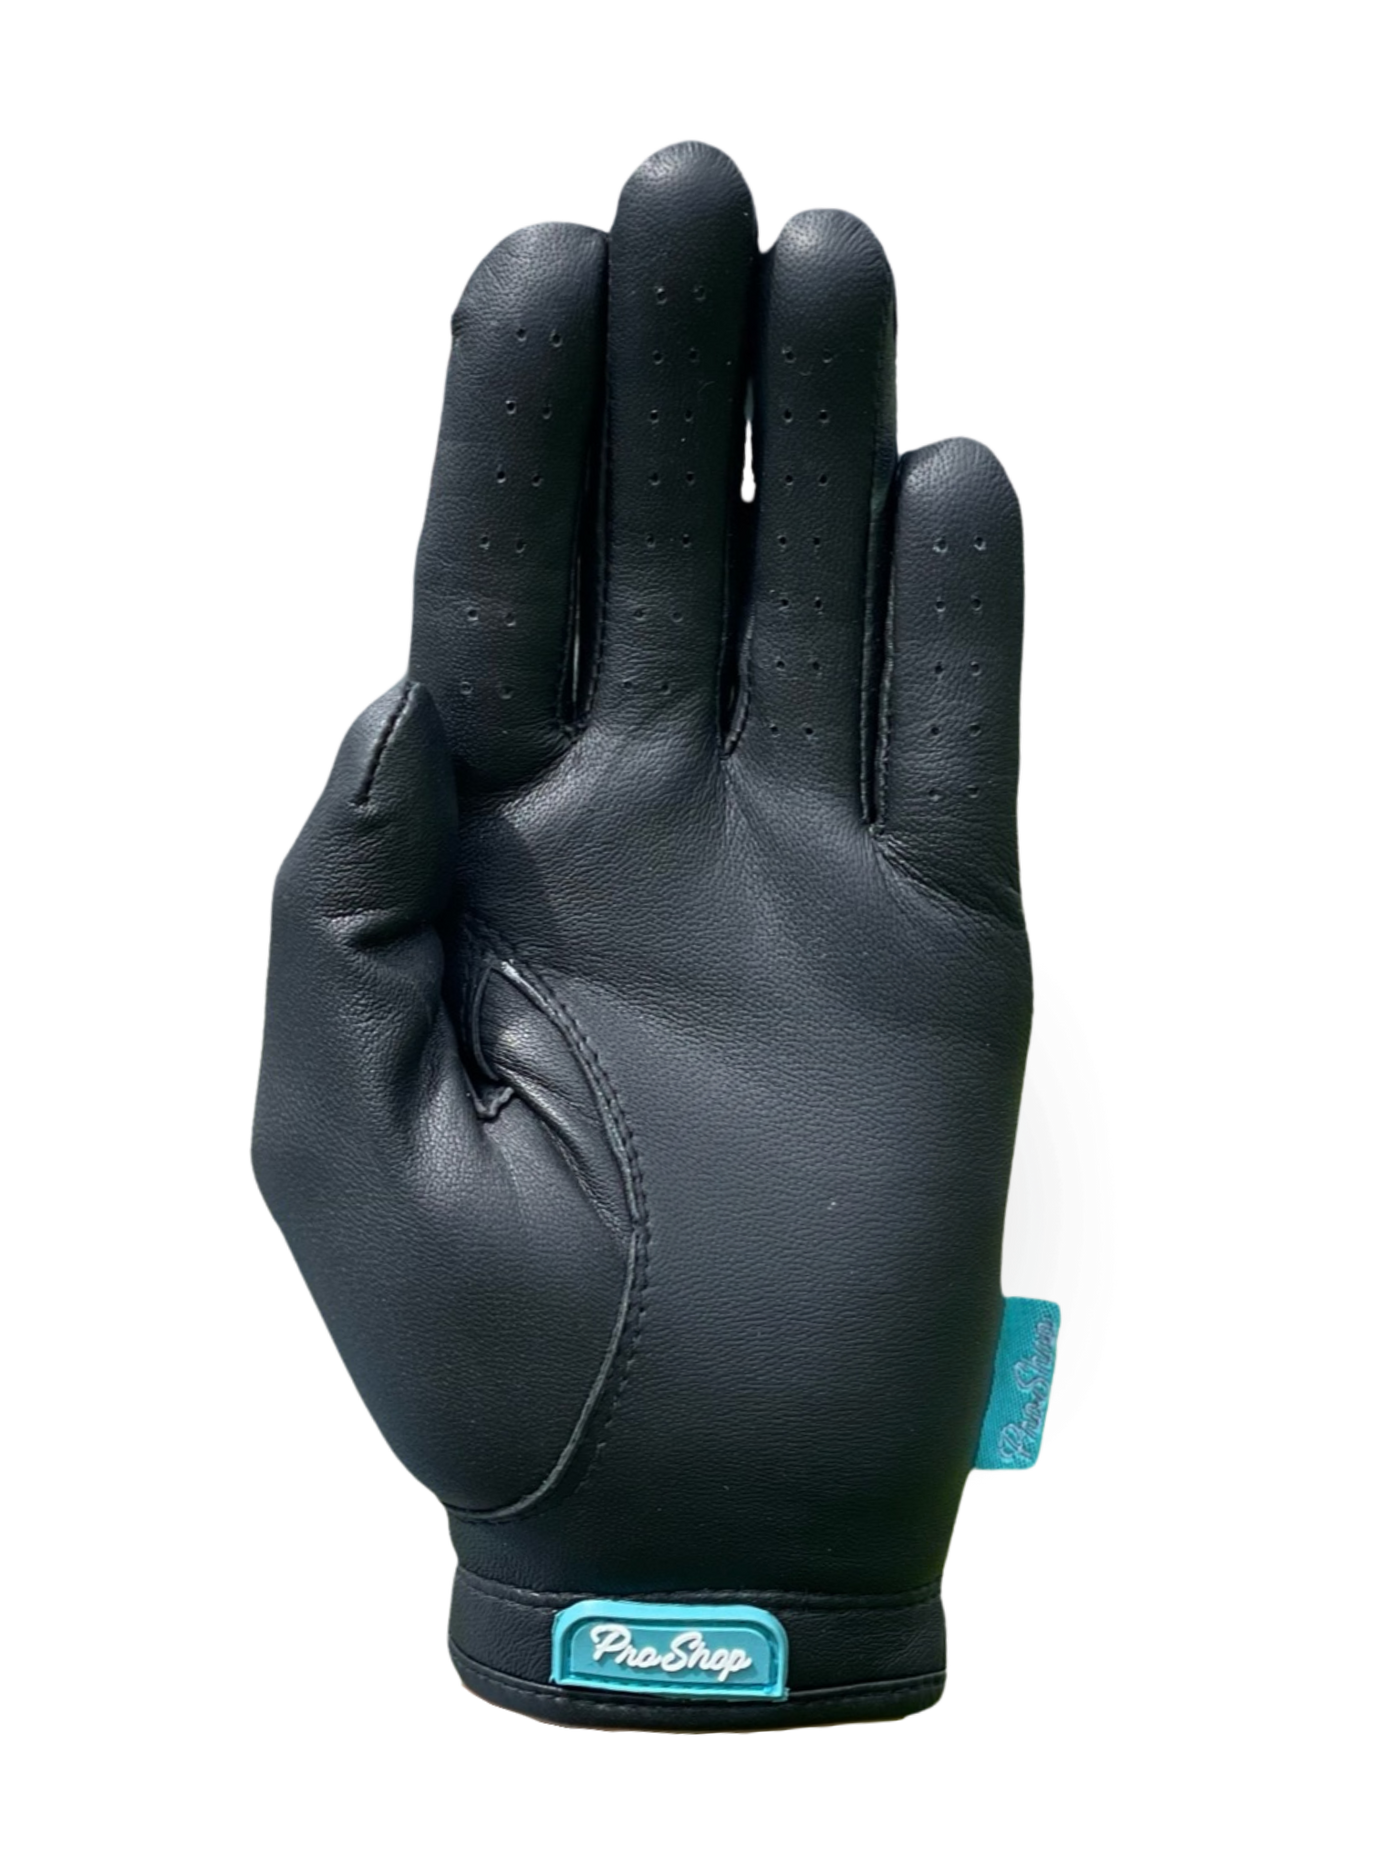 The Midnight Glove